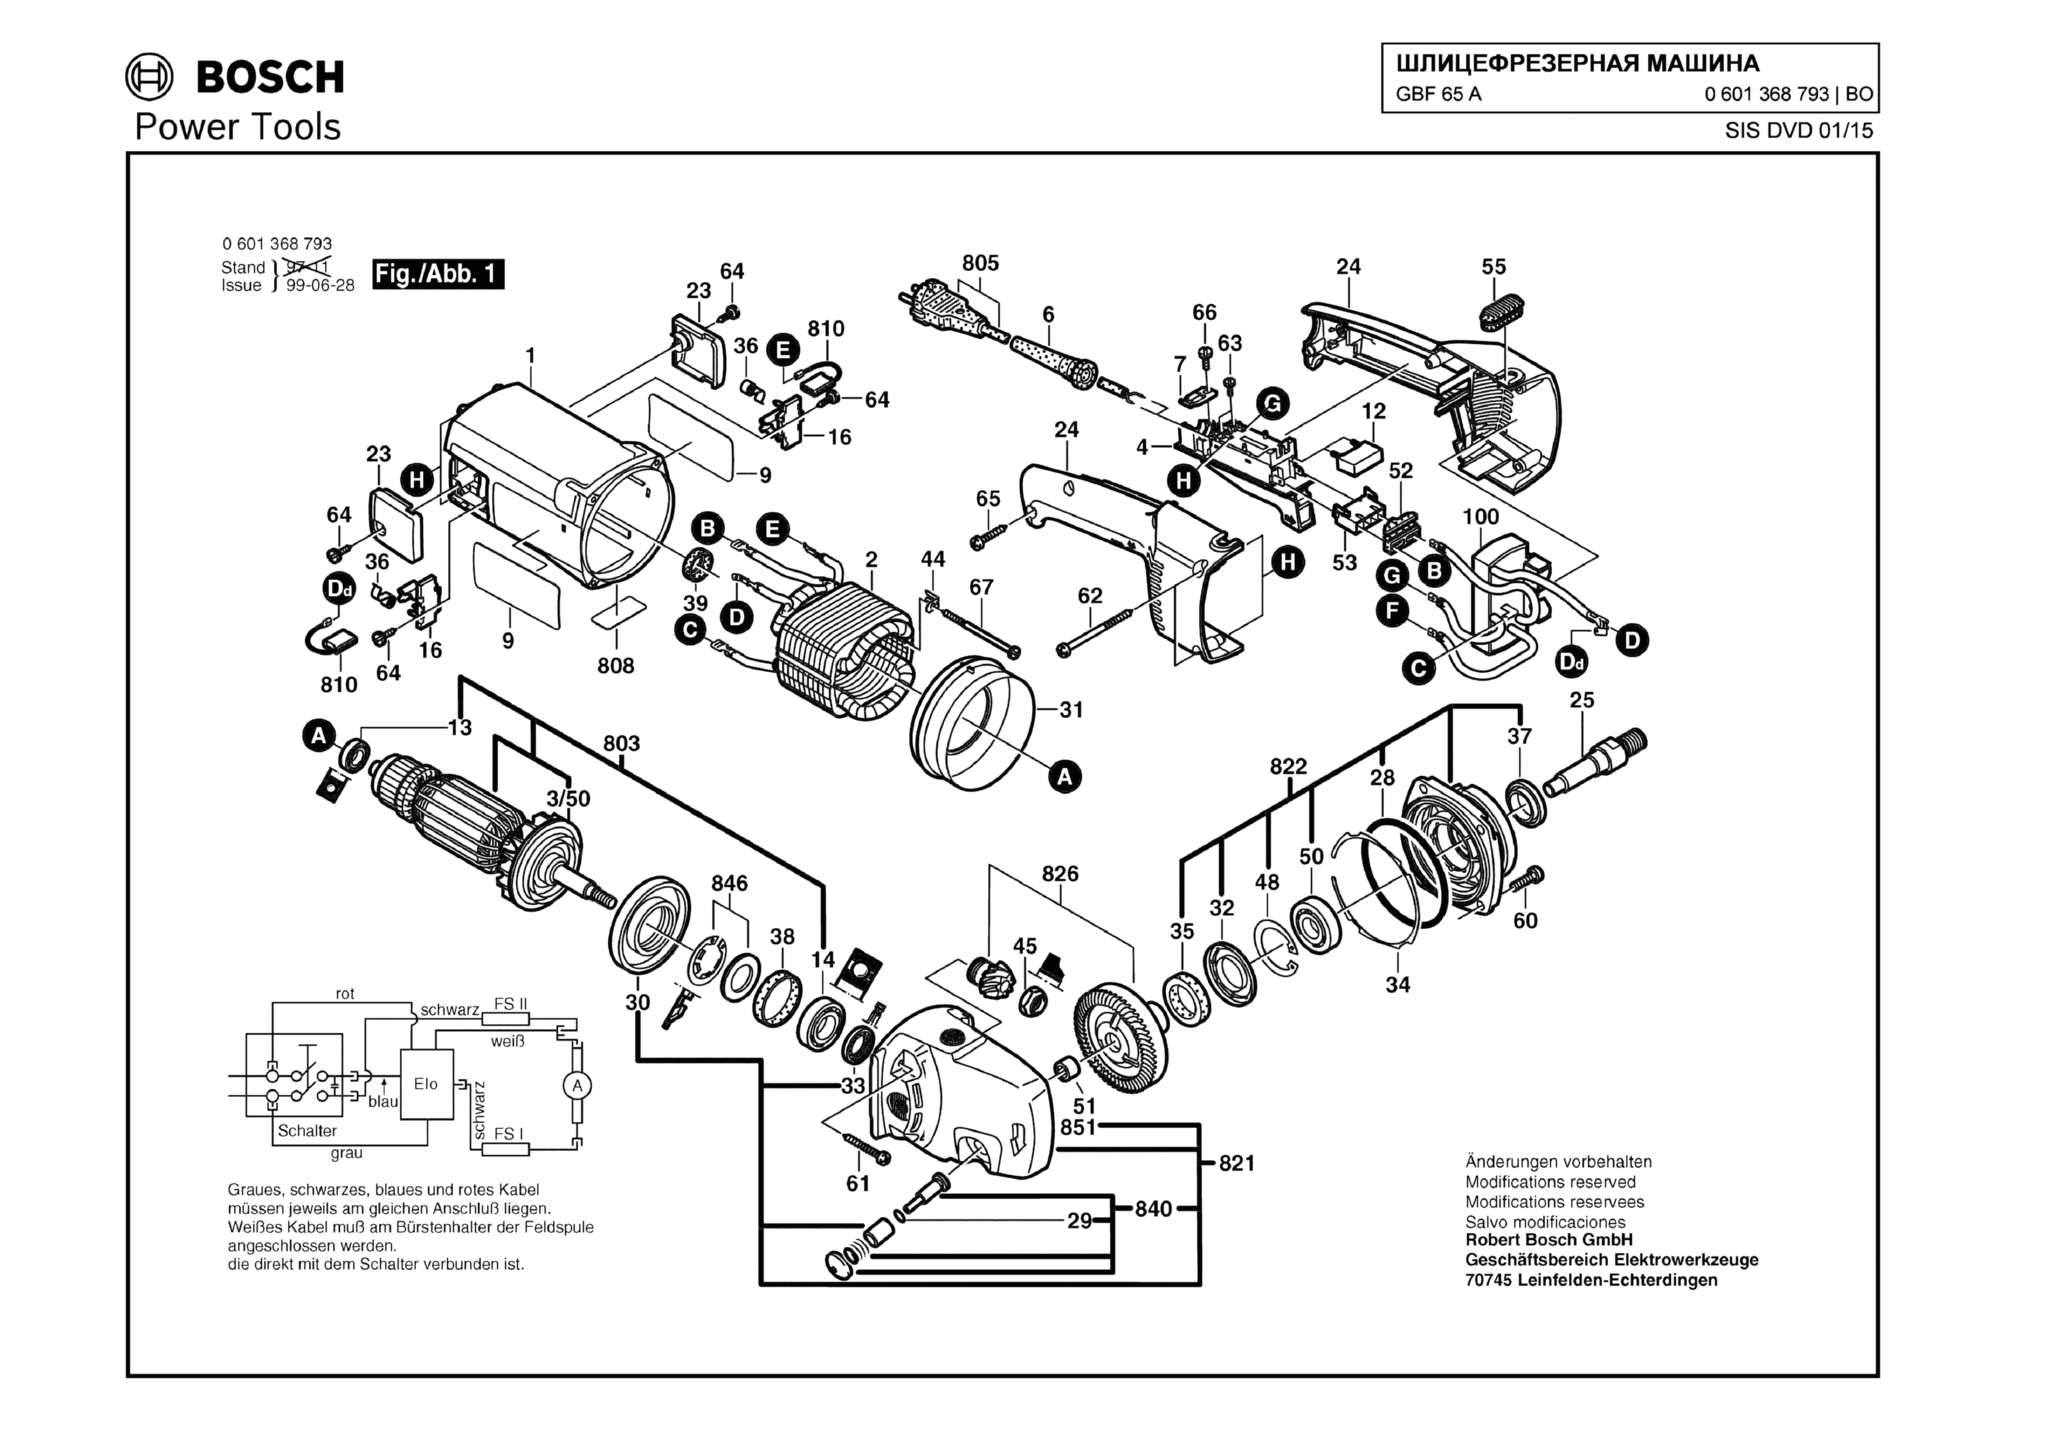 Запчасти, схема и деталировка Bosch GBF 65 A (ТИП 0601368793)